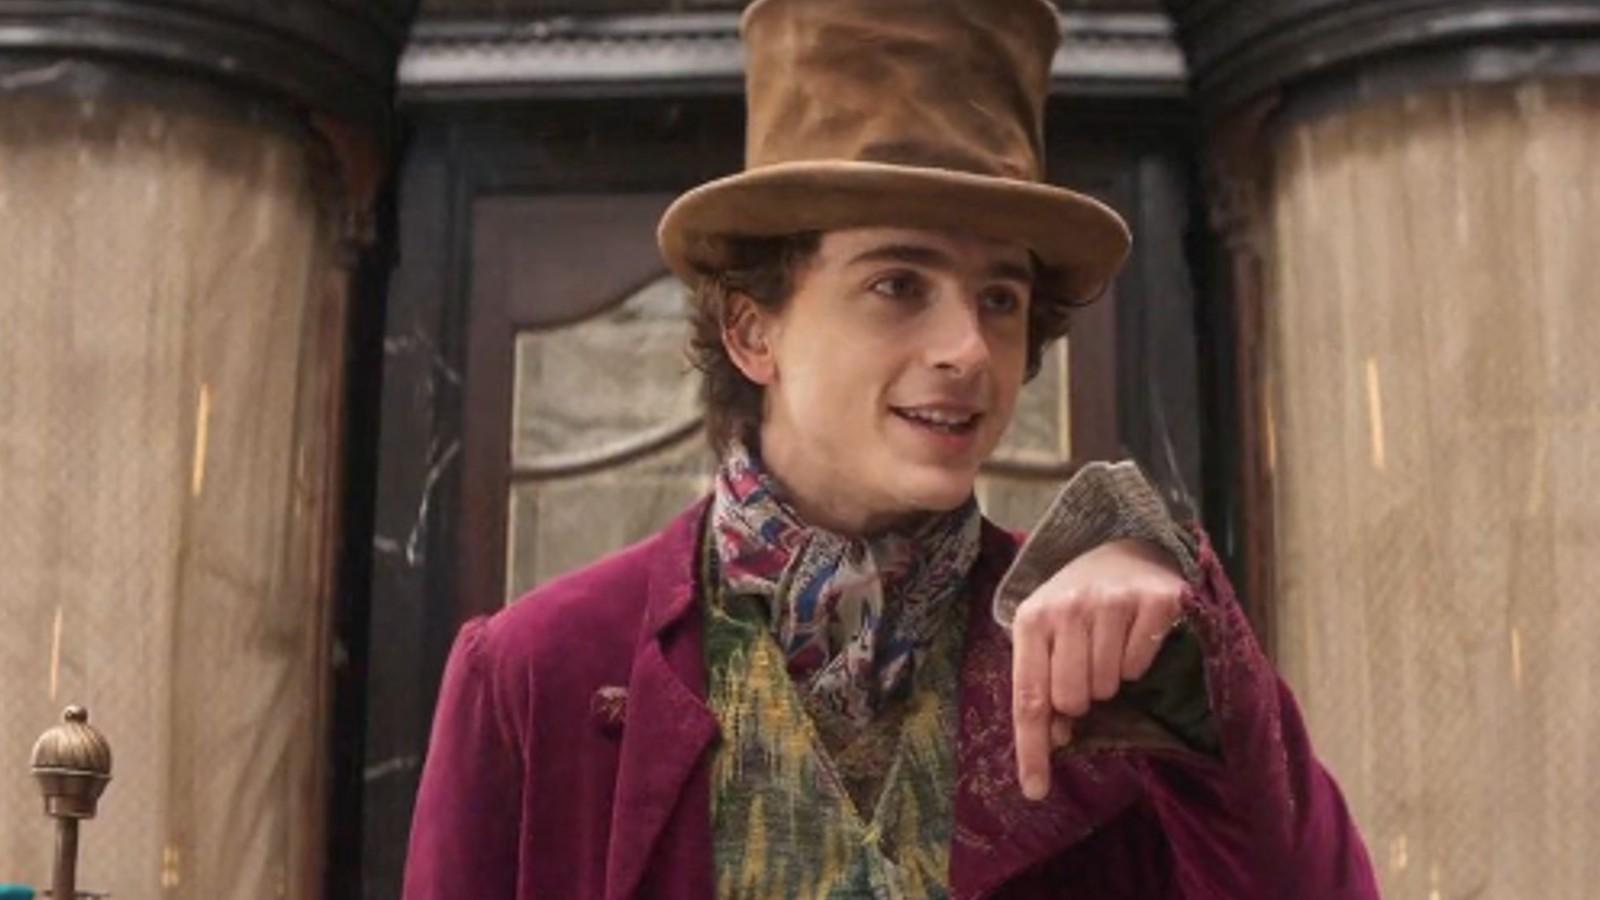 Timothee Chalamet as Willy Wonka in Wonka